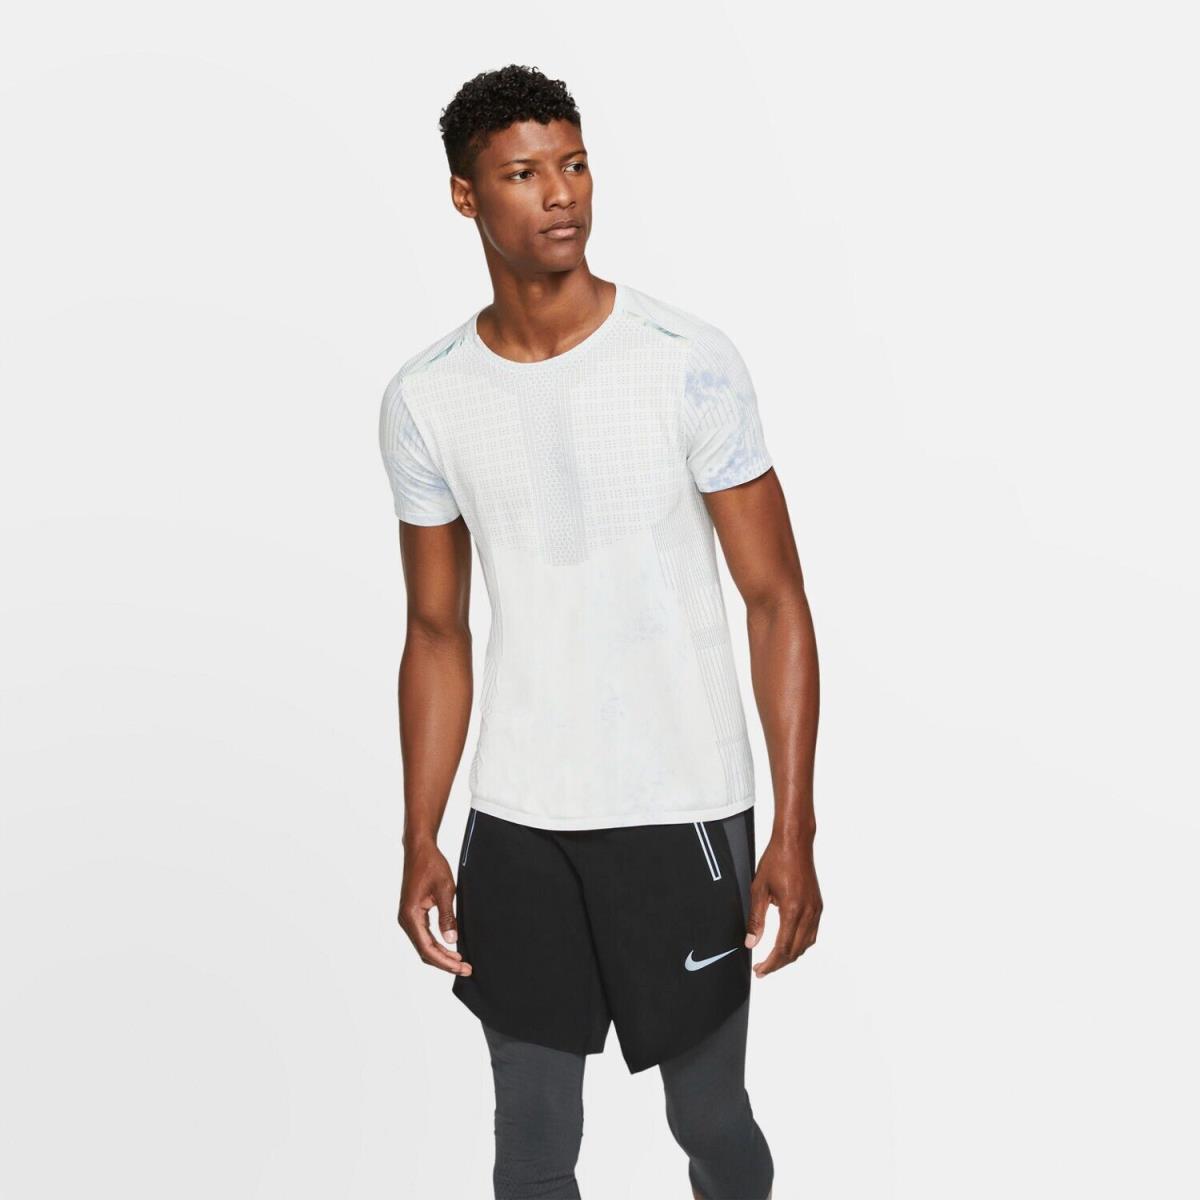 Nike Mens Dri Tech Pack Running Shirt Gray BV5623 012 Large